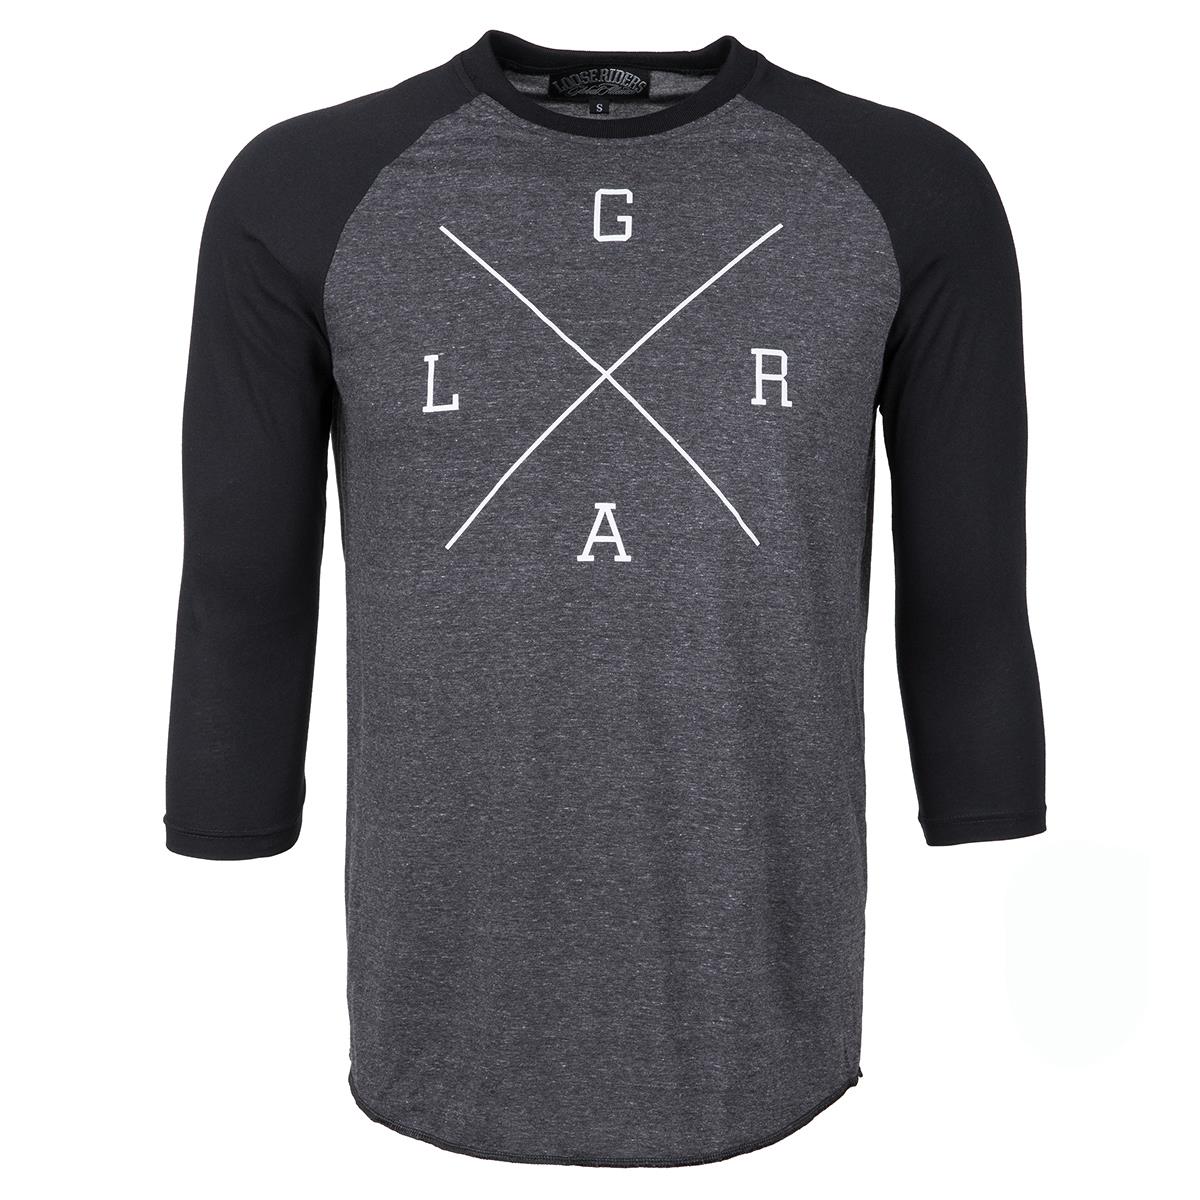 Loose Riders 3/4 Sleeve Shirt  LRXGA - Grey/Black